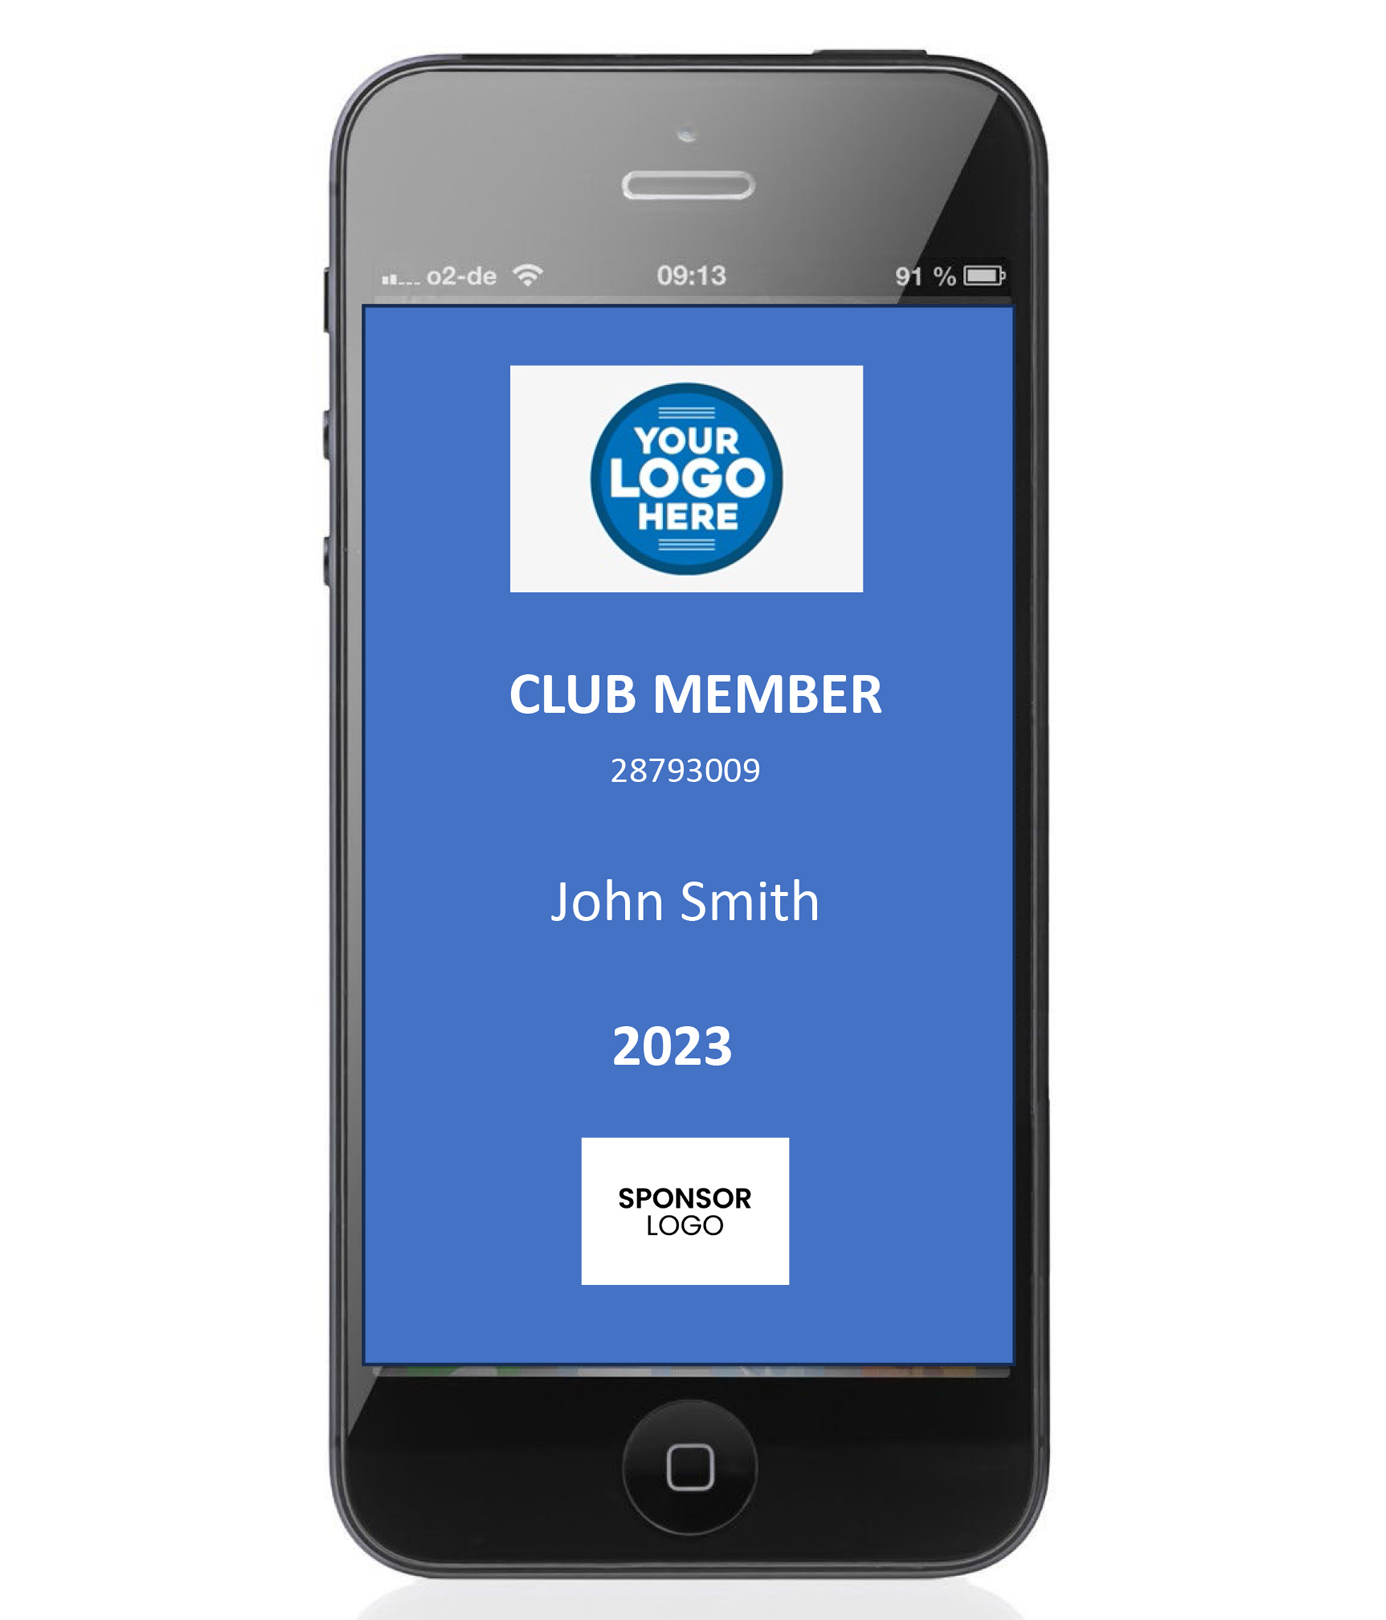 Club Membership Software